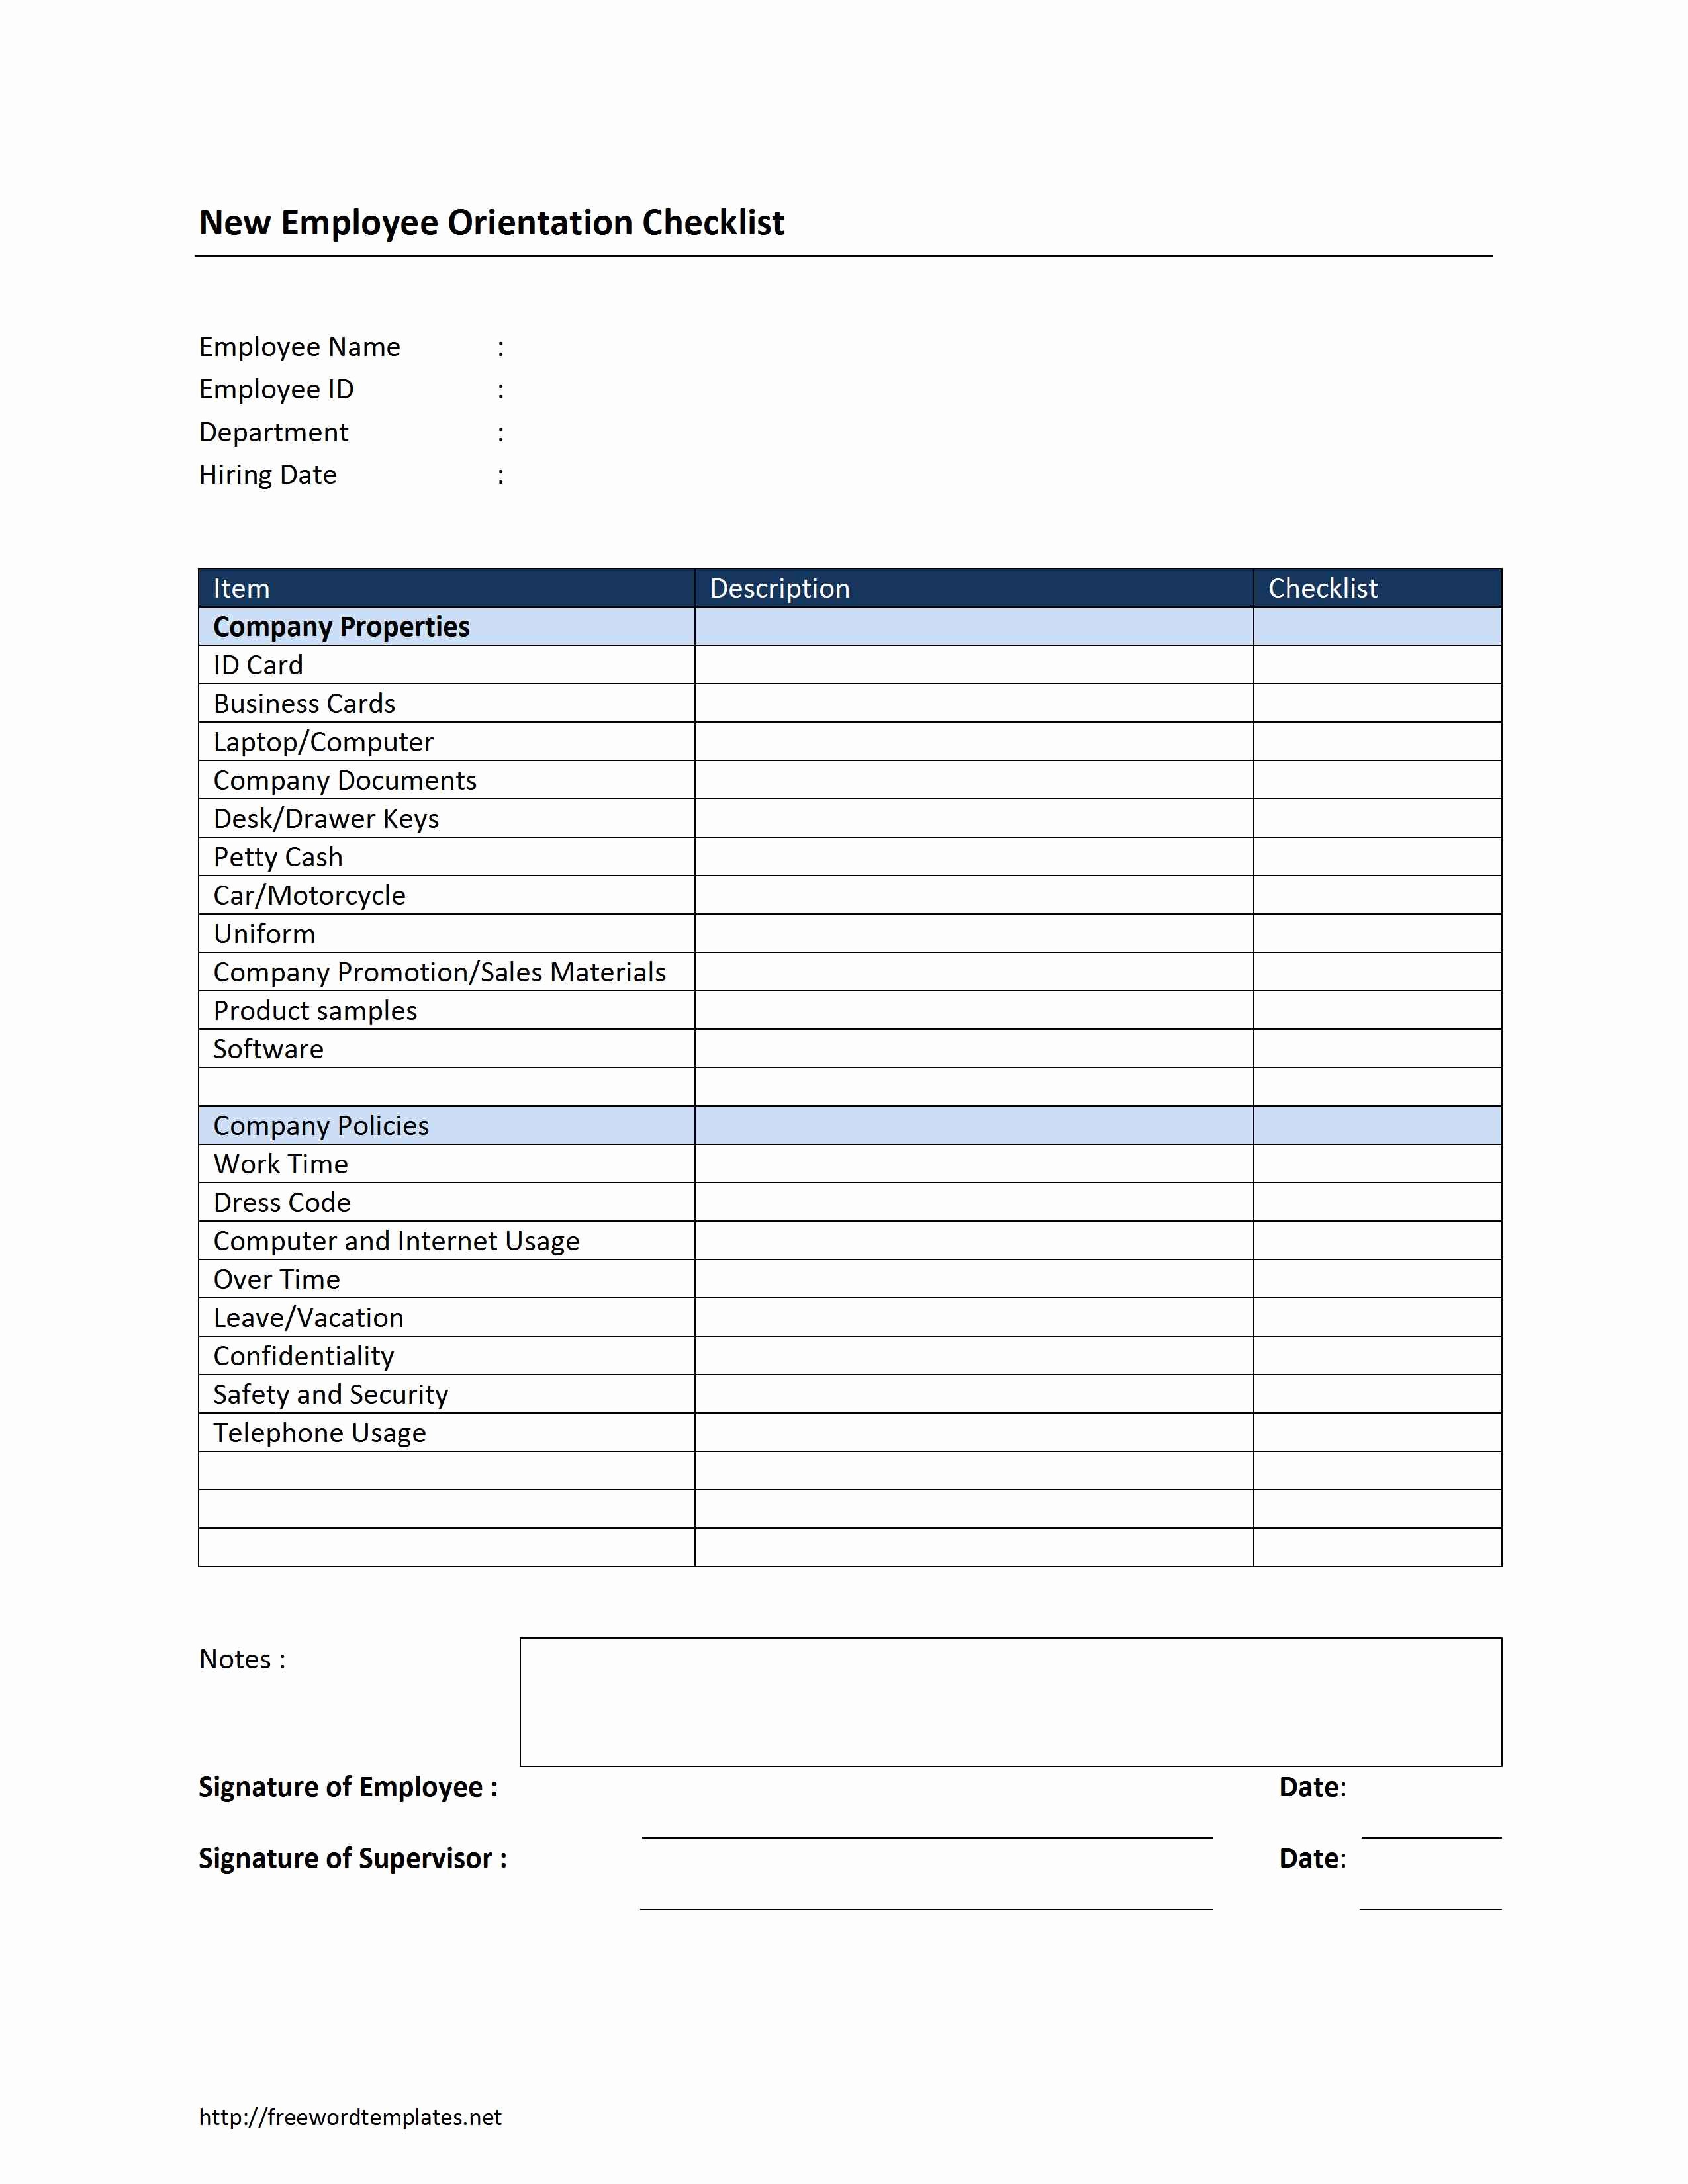 New Hire Checklist Excel Unique New Employee orientation Checklist